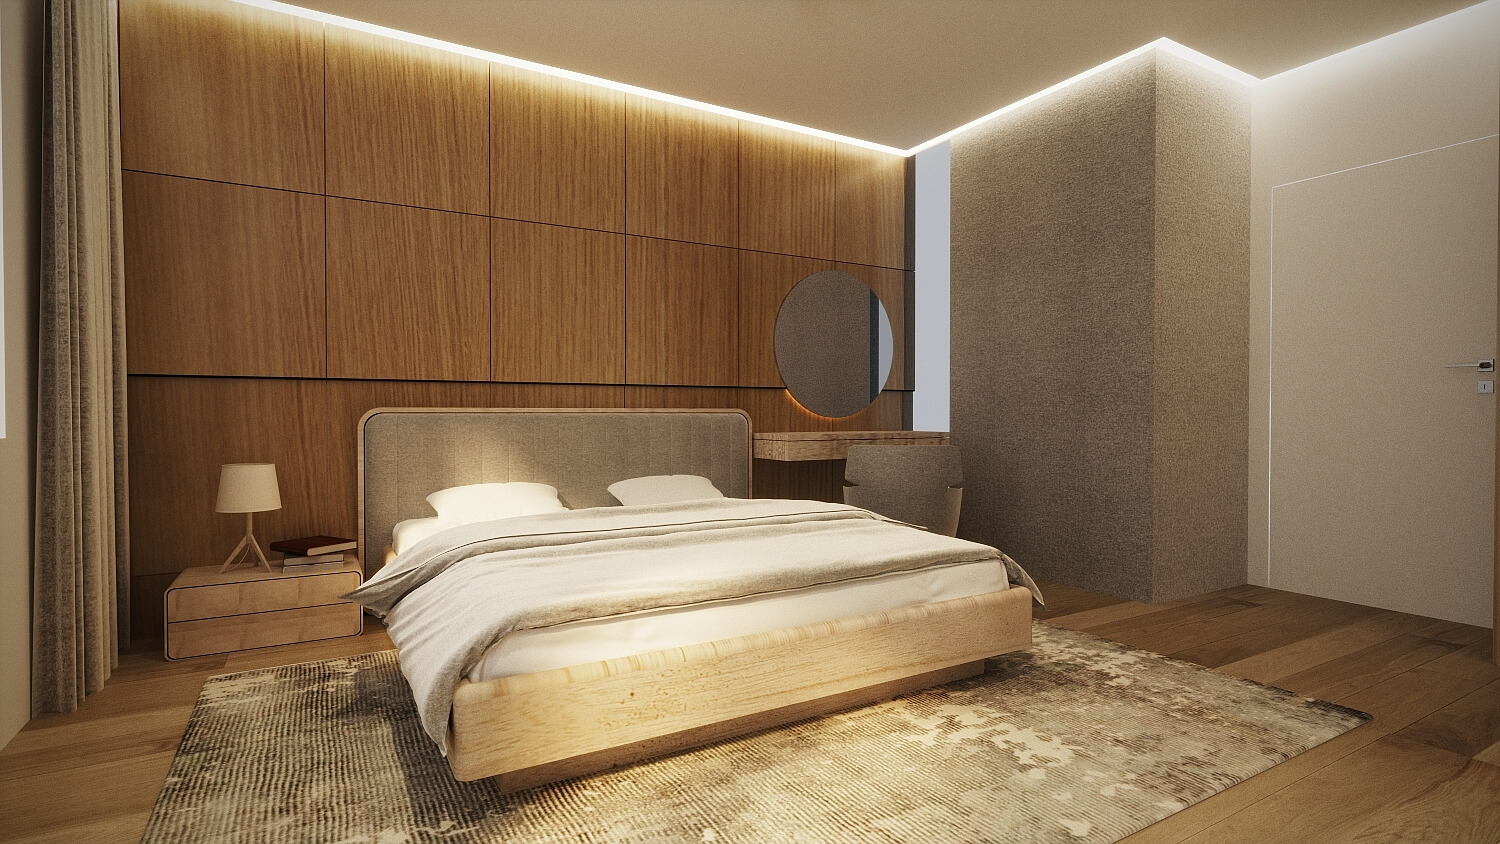 Łóżko drewniane Sense 1